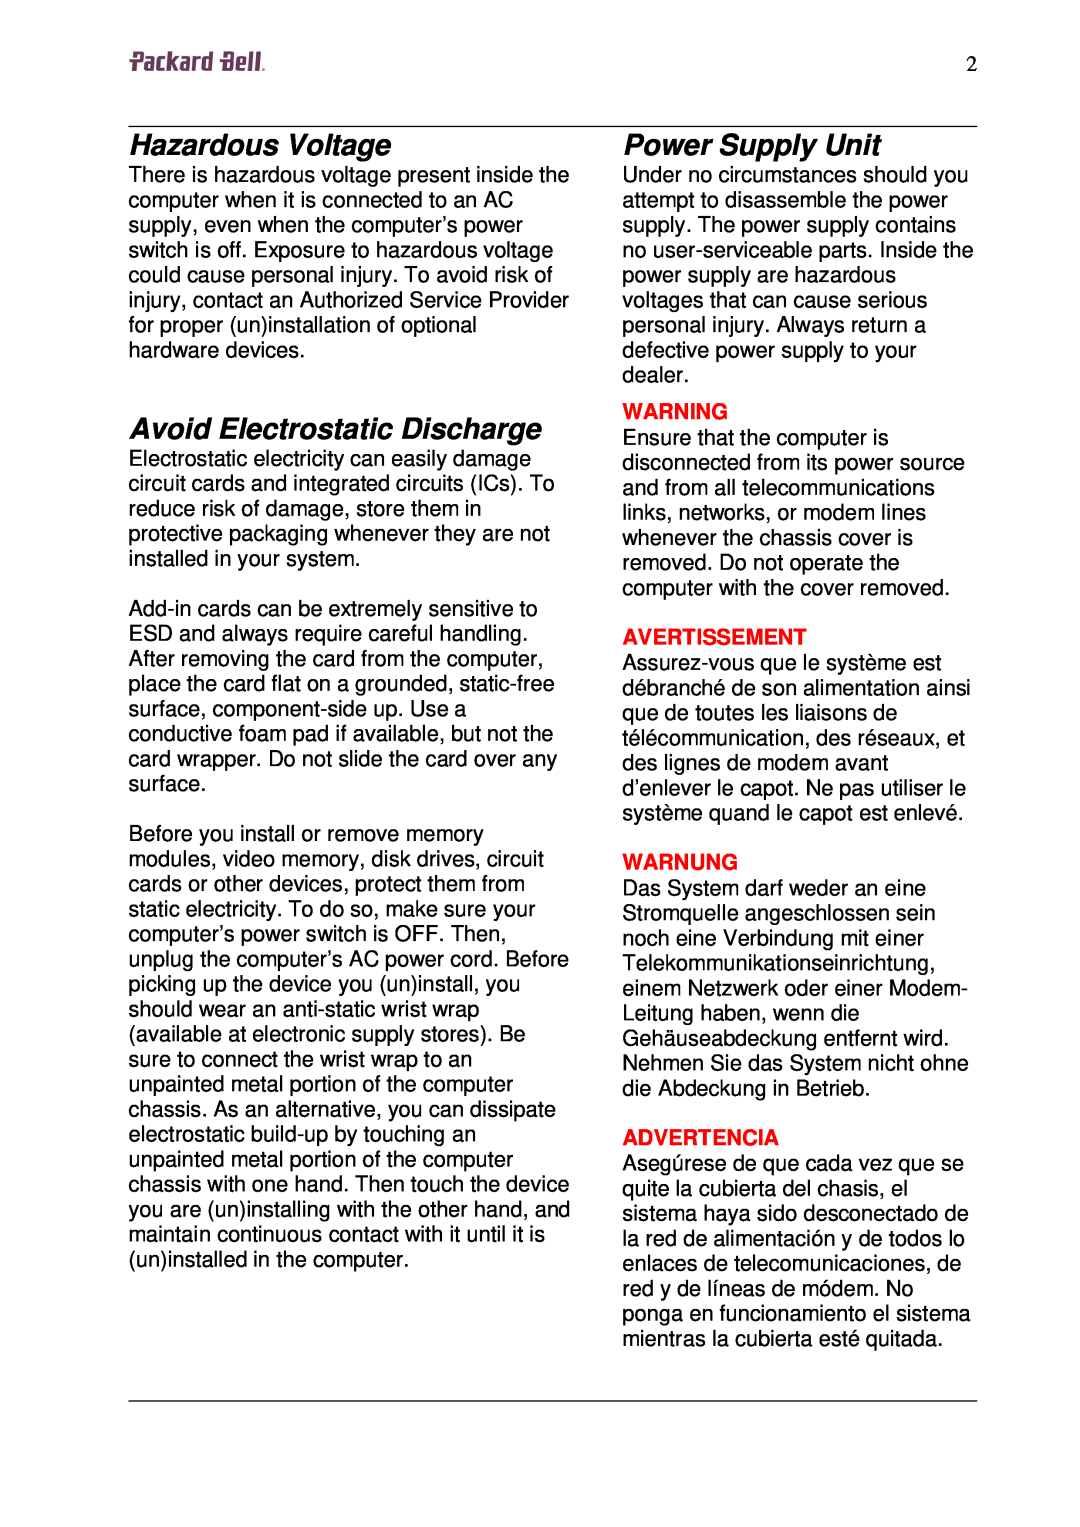 Packard Bell W7 manual Hazardous Voltage, Avoid Electrostatic Discharge, Power Supply Unit, Warnung, Advertencia 